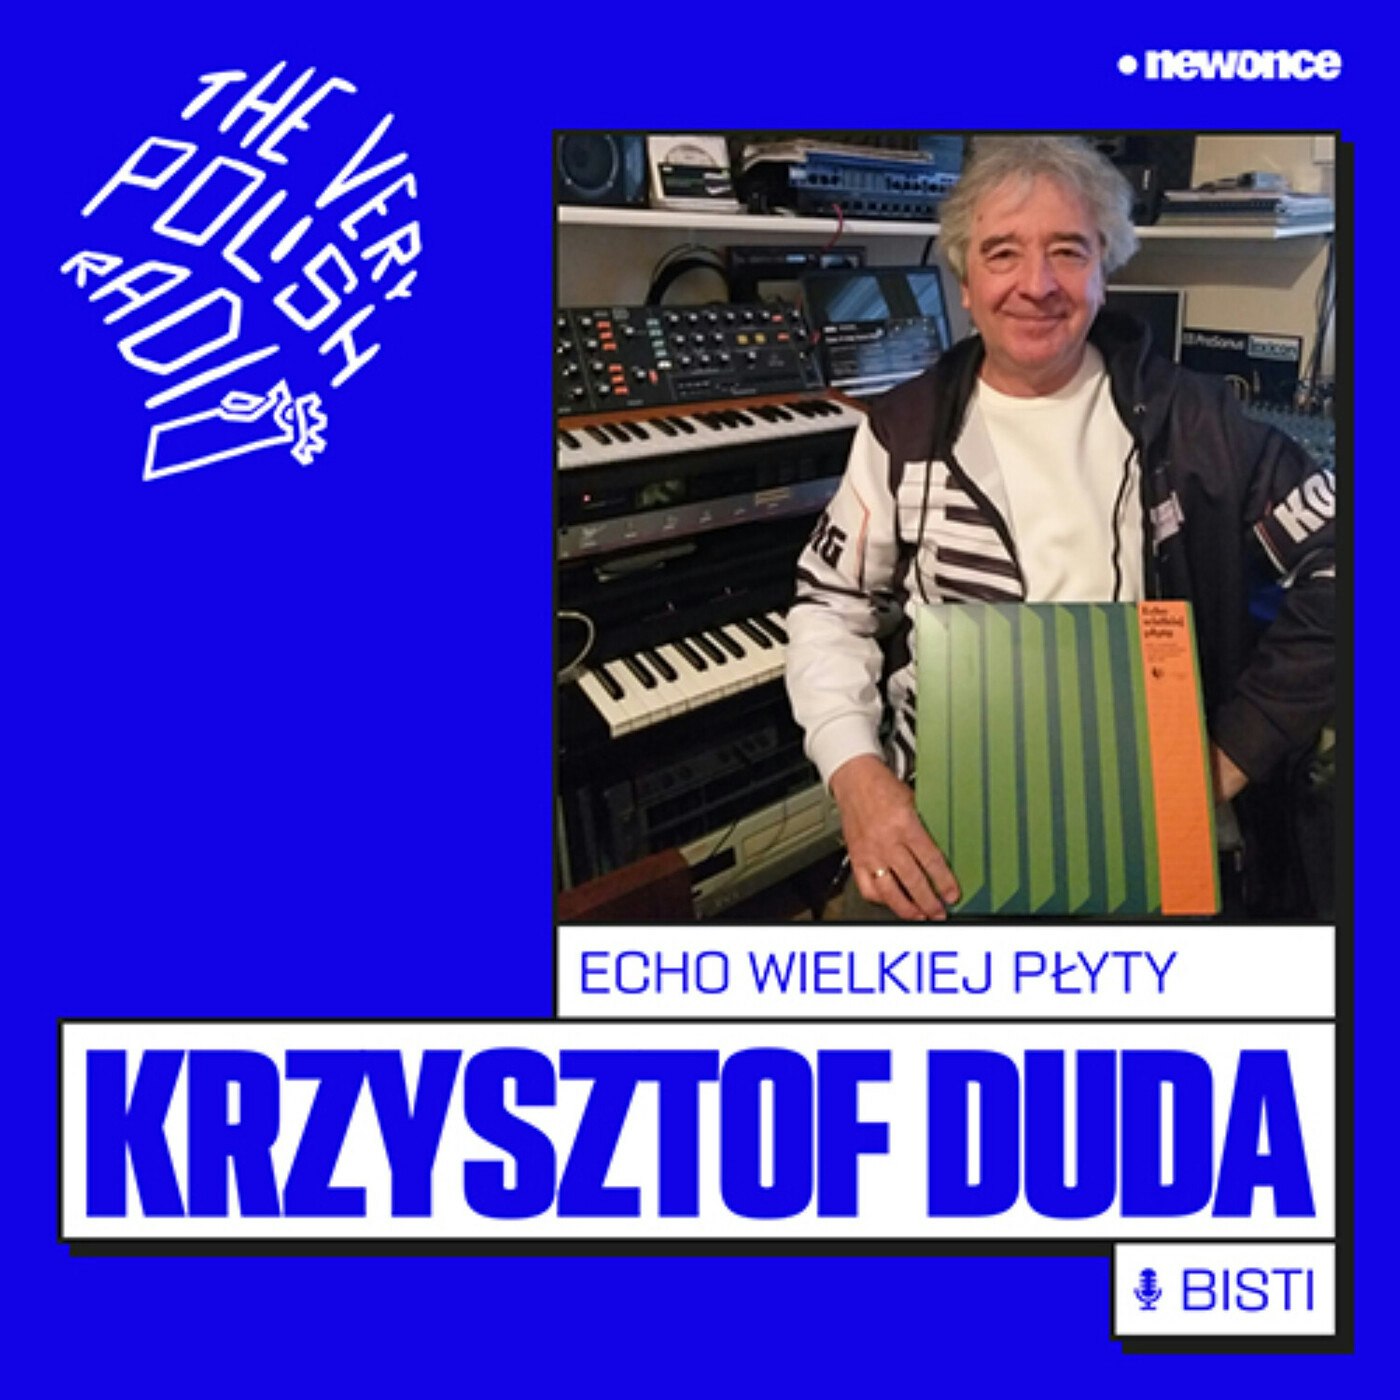 The Very Polish Radio